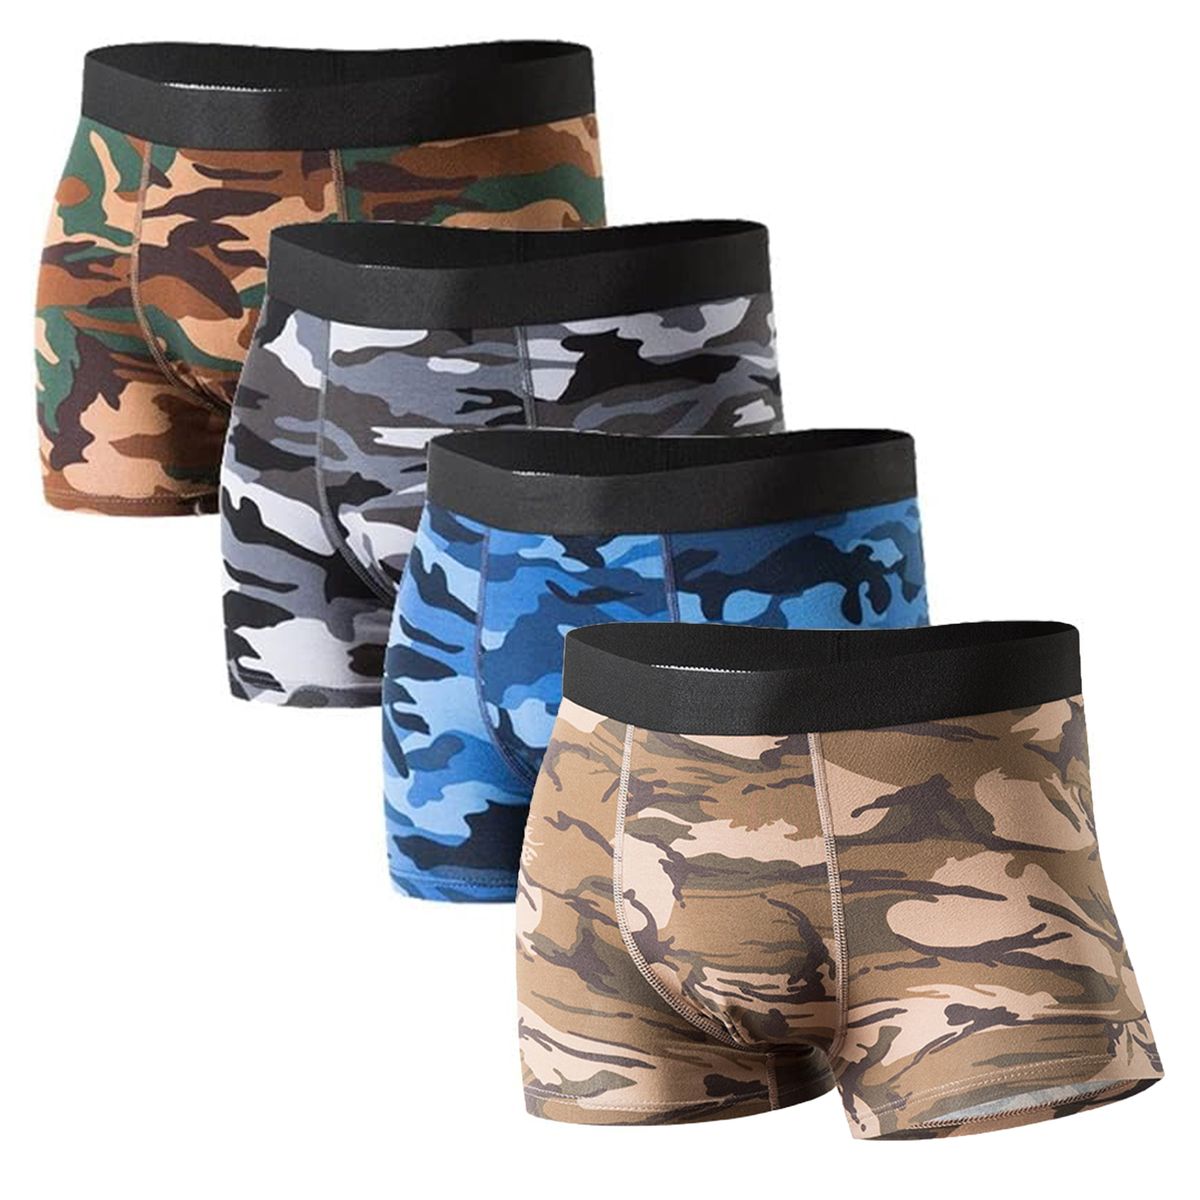 4 Piece Men's Cotton Camouflage Underwear Sports Boxer Briefs Mid-rise, Shop Today. Get it Tomorrow!